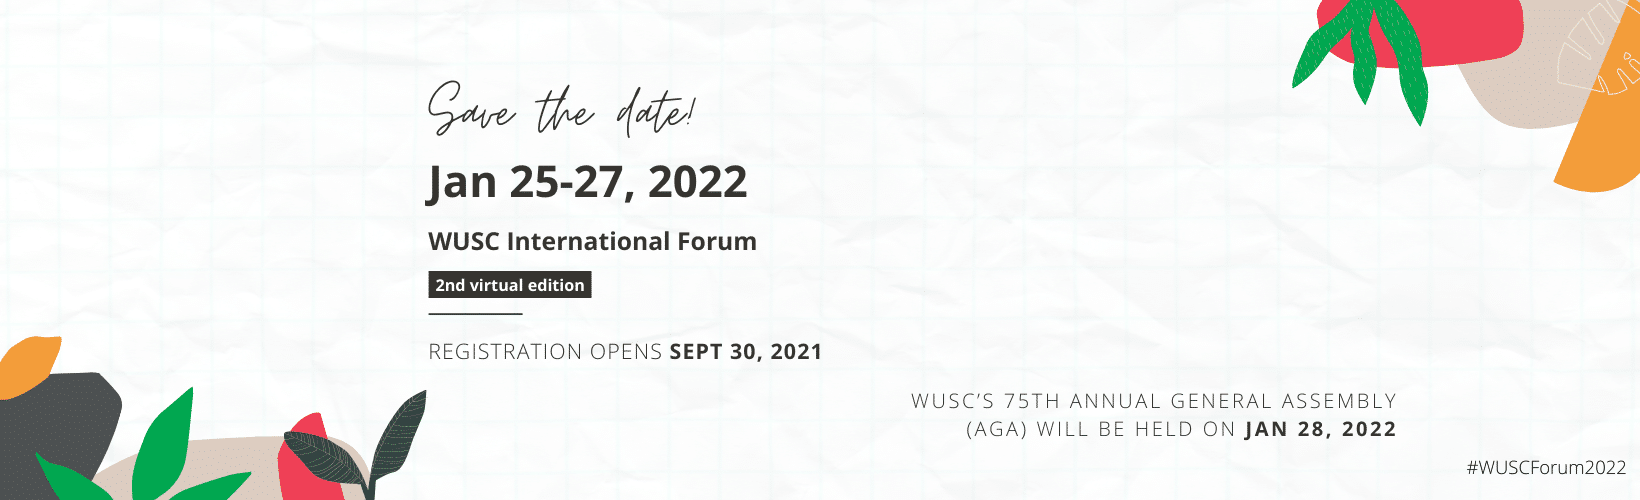 International Forum - Save the Date